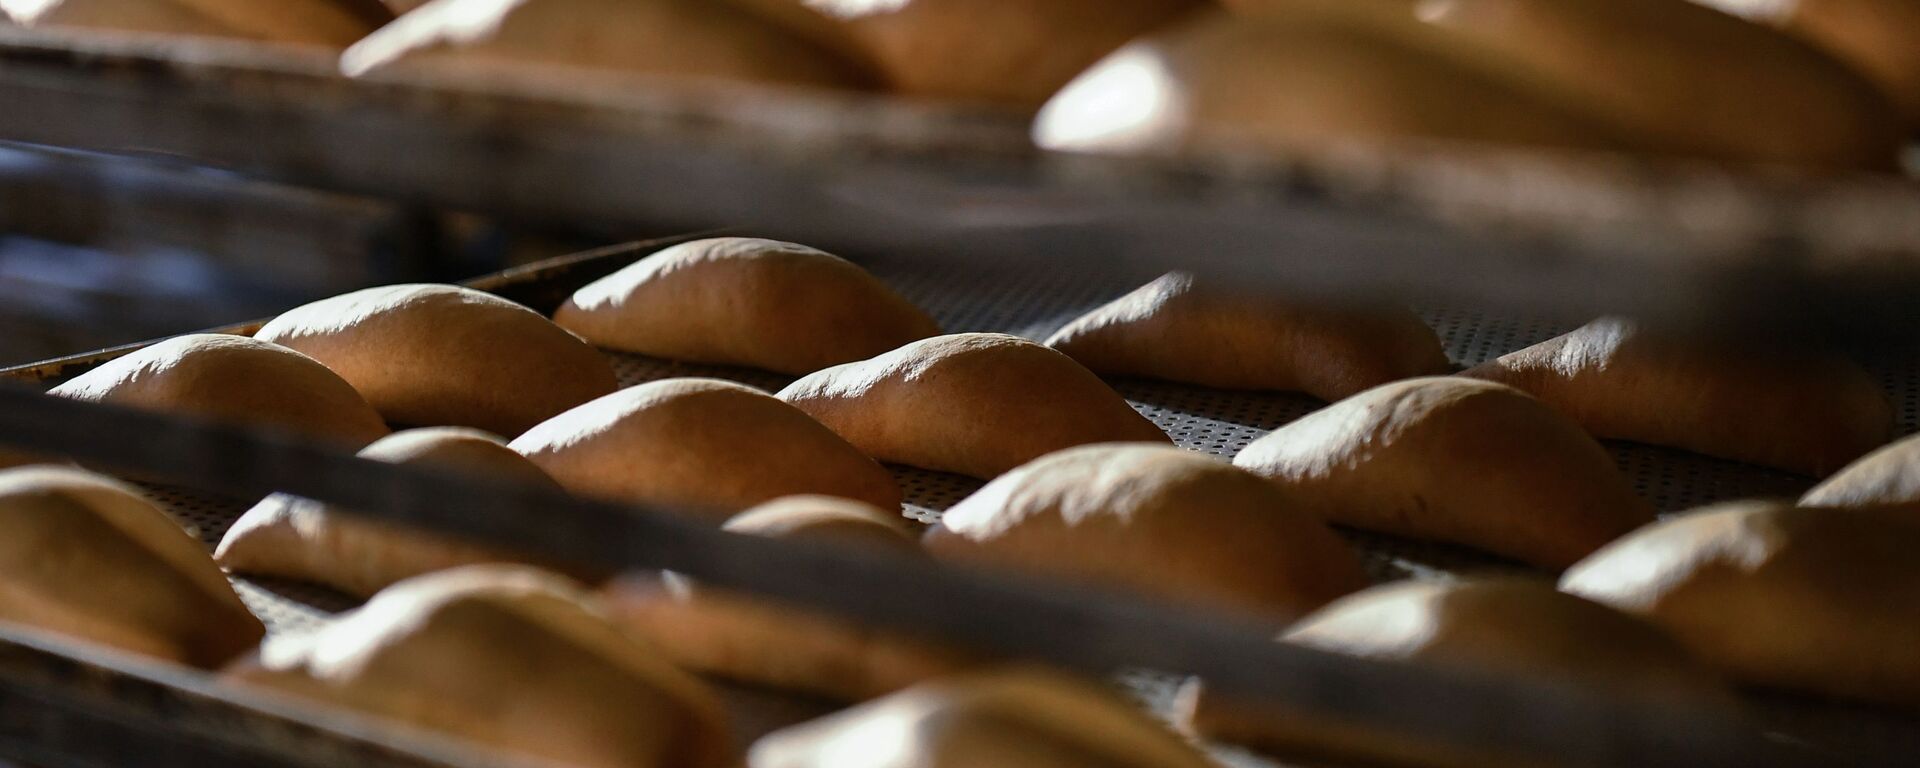 Производство хлеба, фото из архива - Sputnik Азербайджан, 1920, 25.02.2021